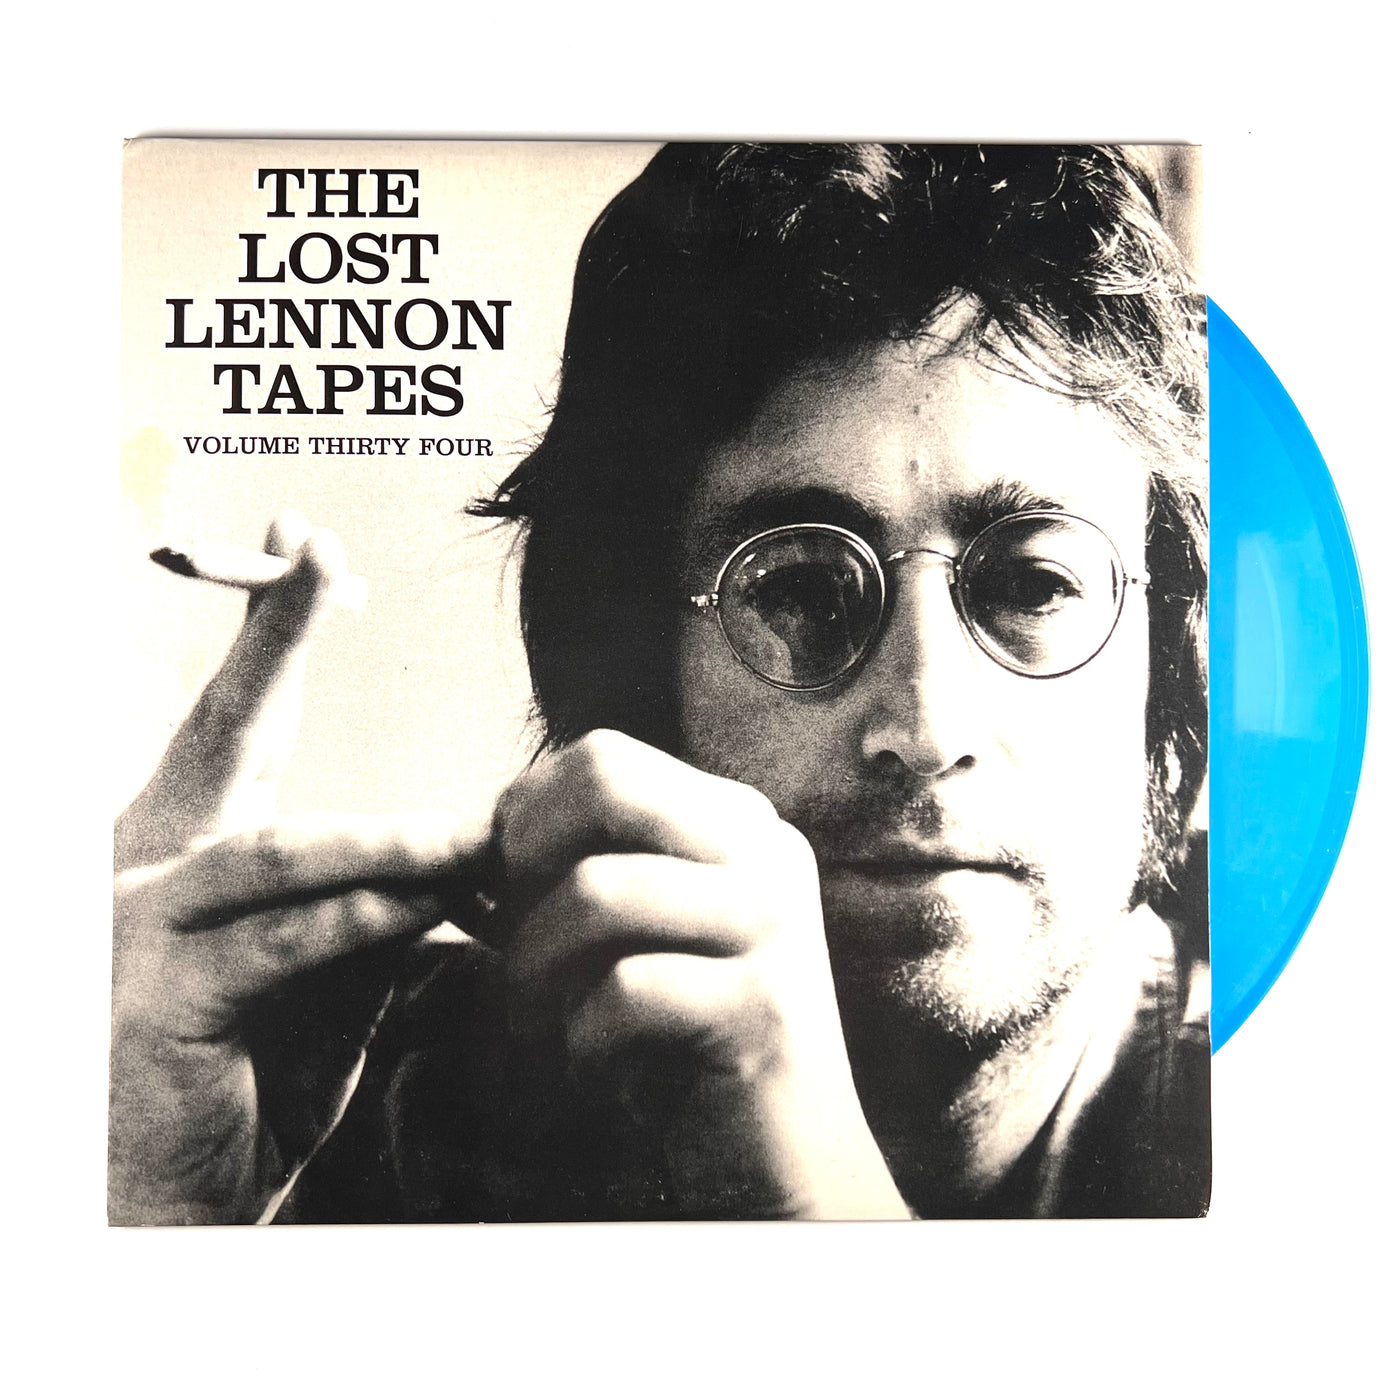 John Lennon - The Lost Lennon Tapes Volume Thirty Four